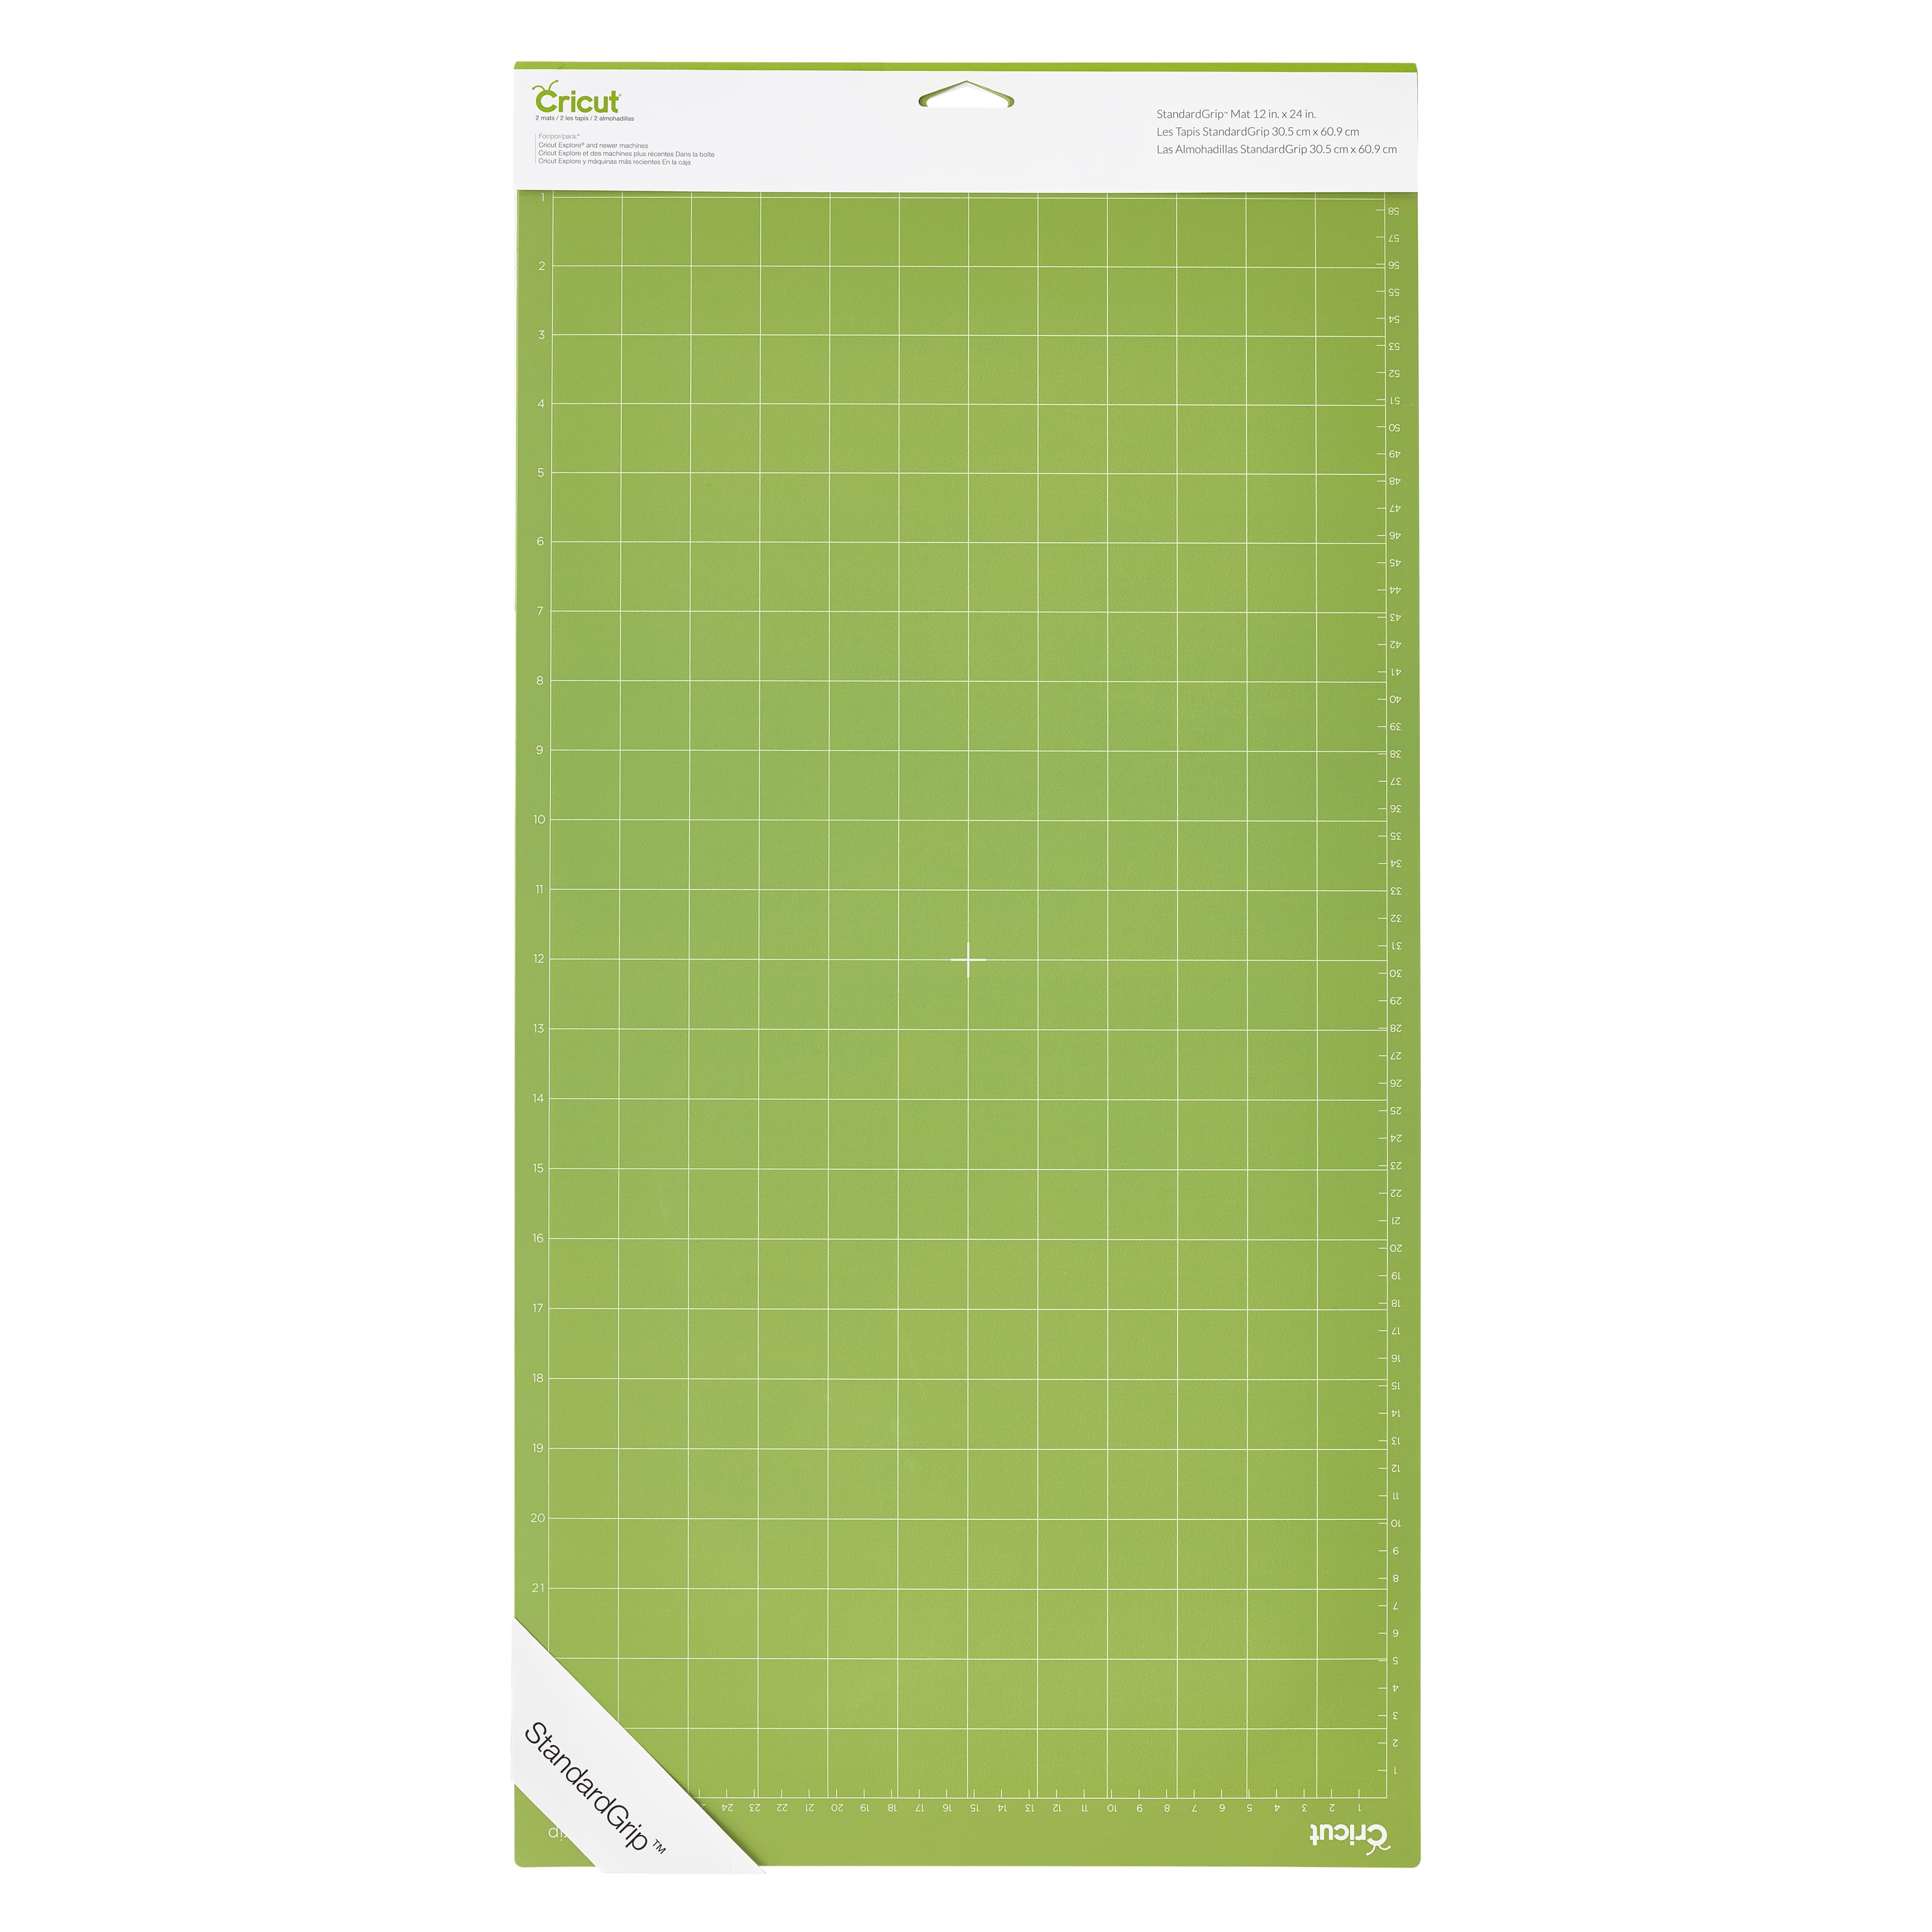 Cricut Joy™ StandardGrip Mat, 4.5 x 6.5